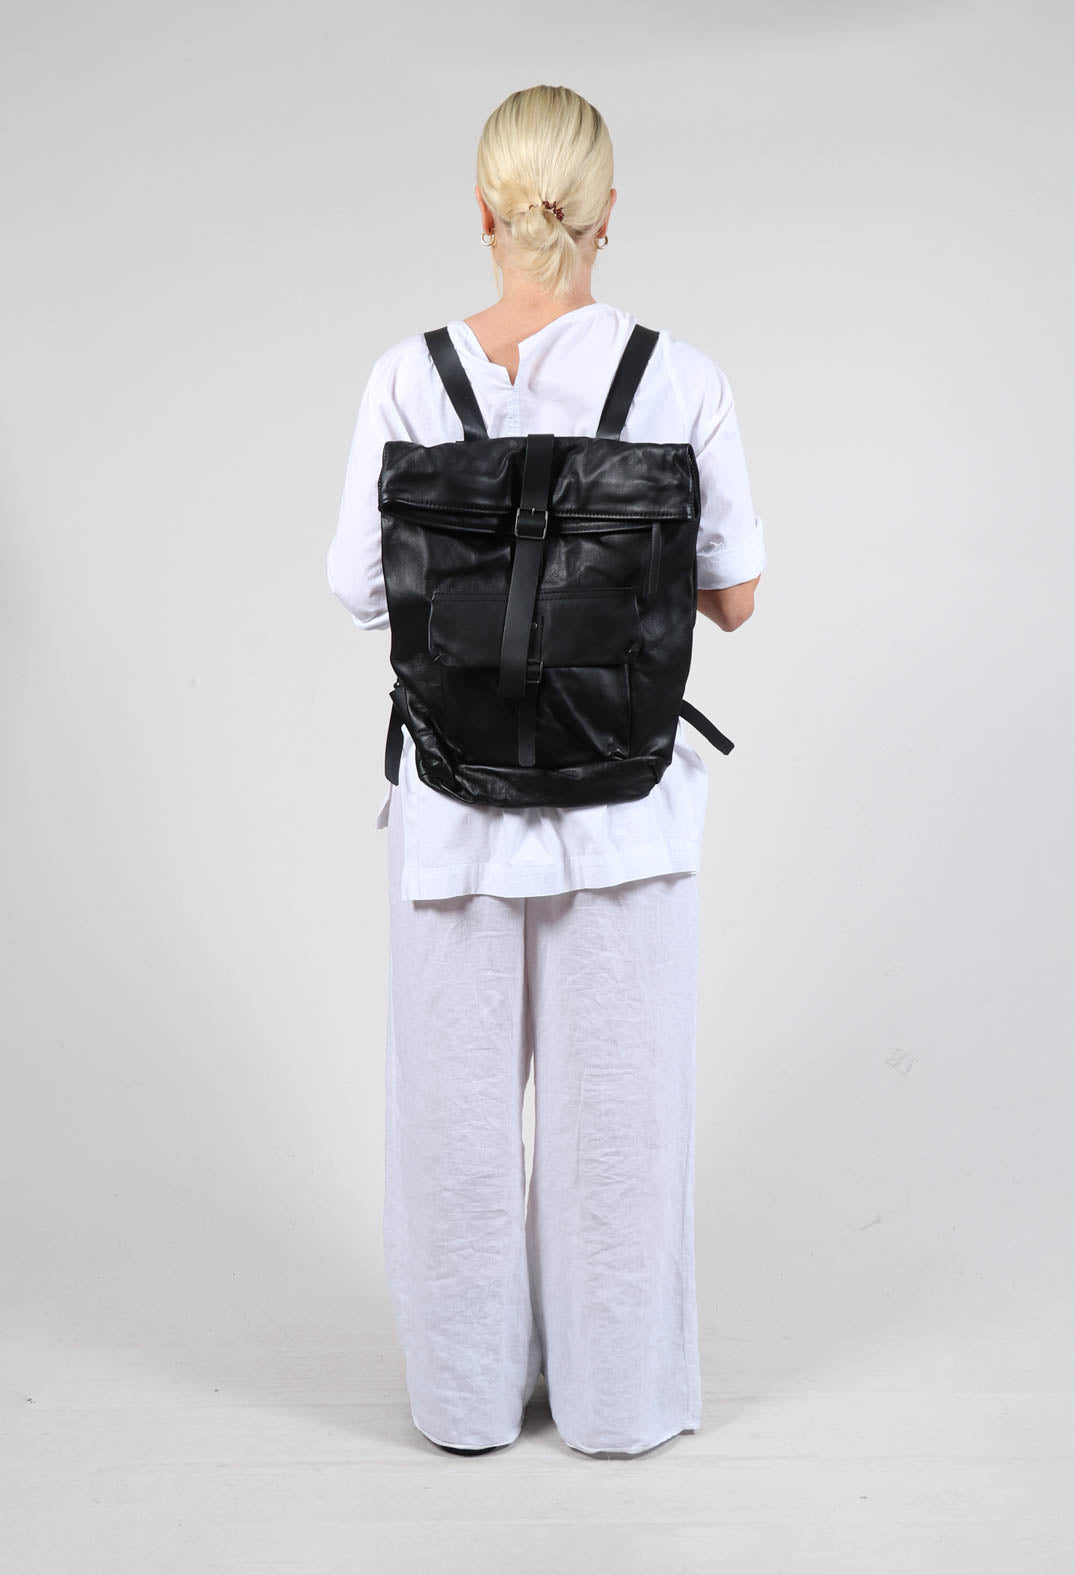 City Backpack in Black Original